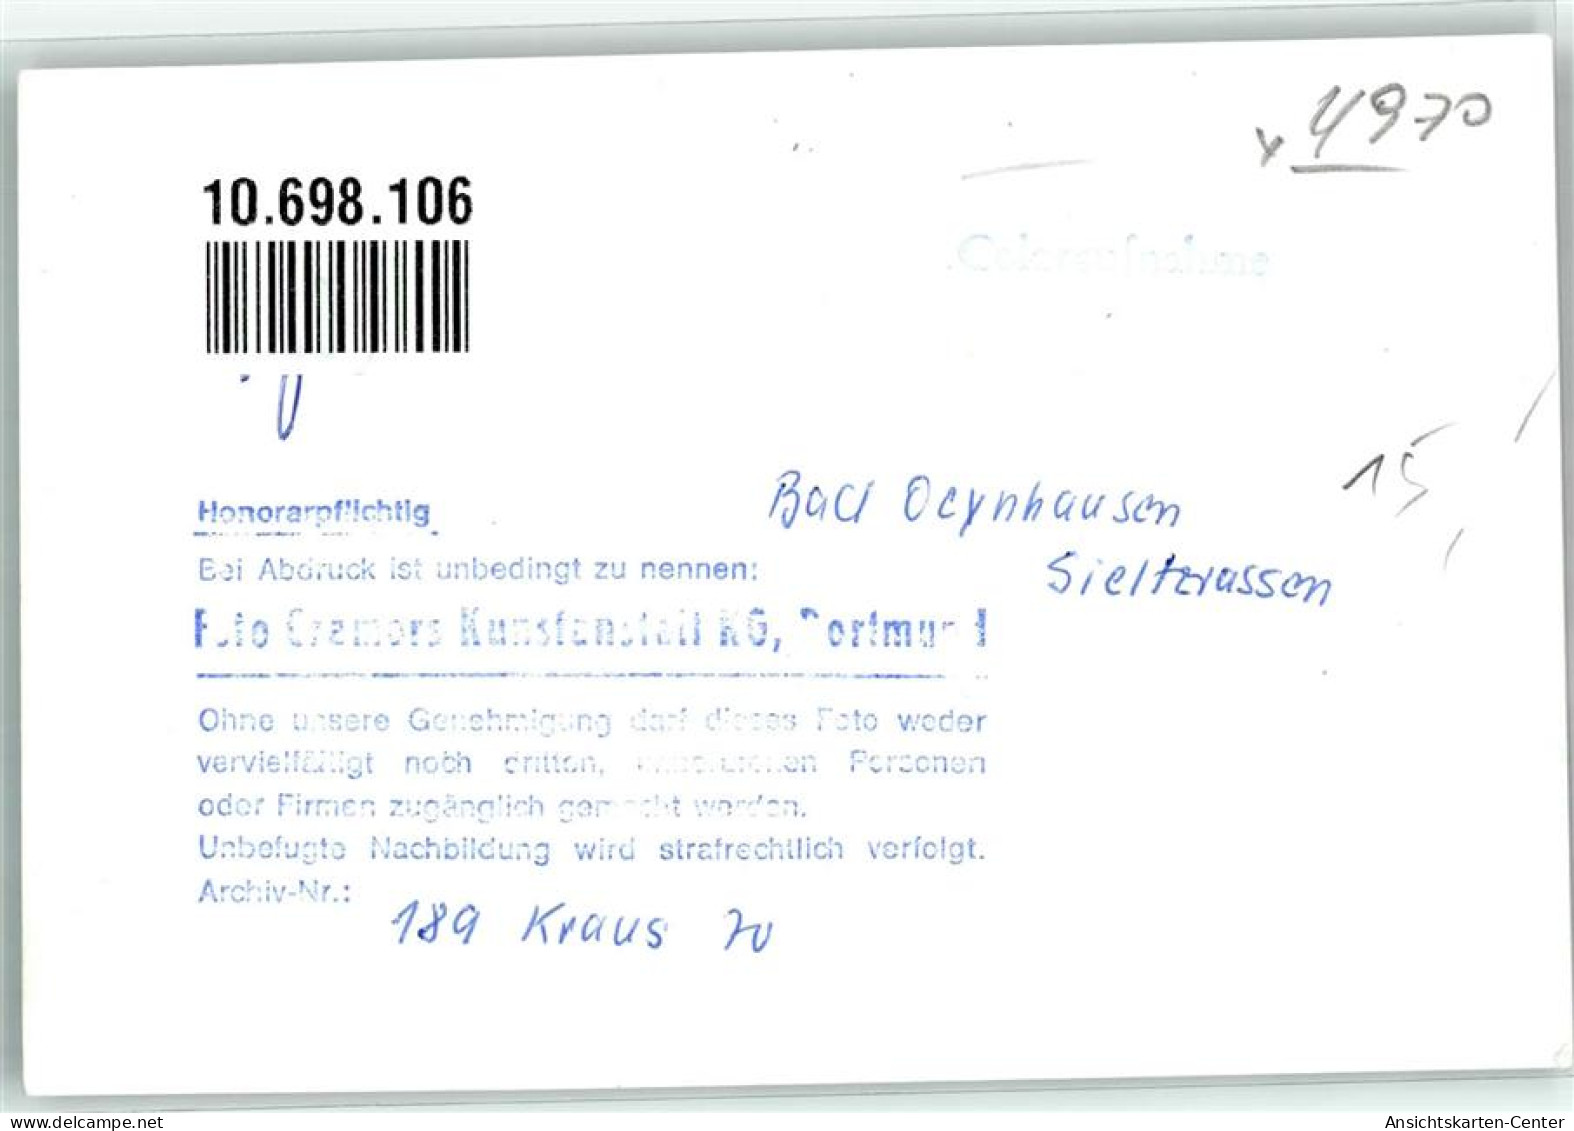 10698106 - Bad Oeynhausen - Bad Oeynhausen